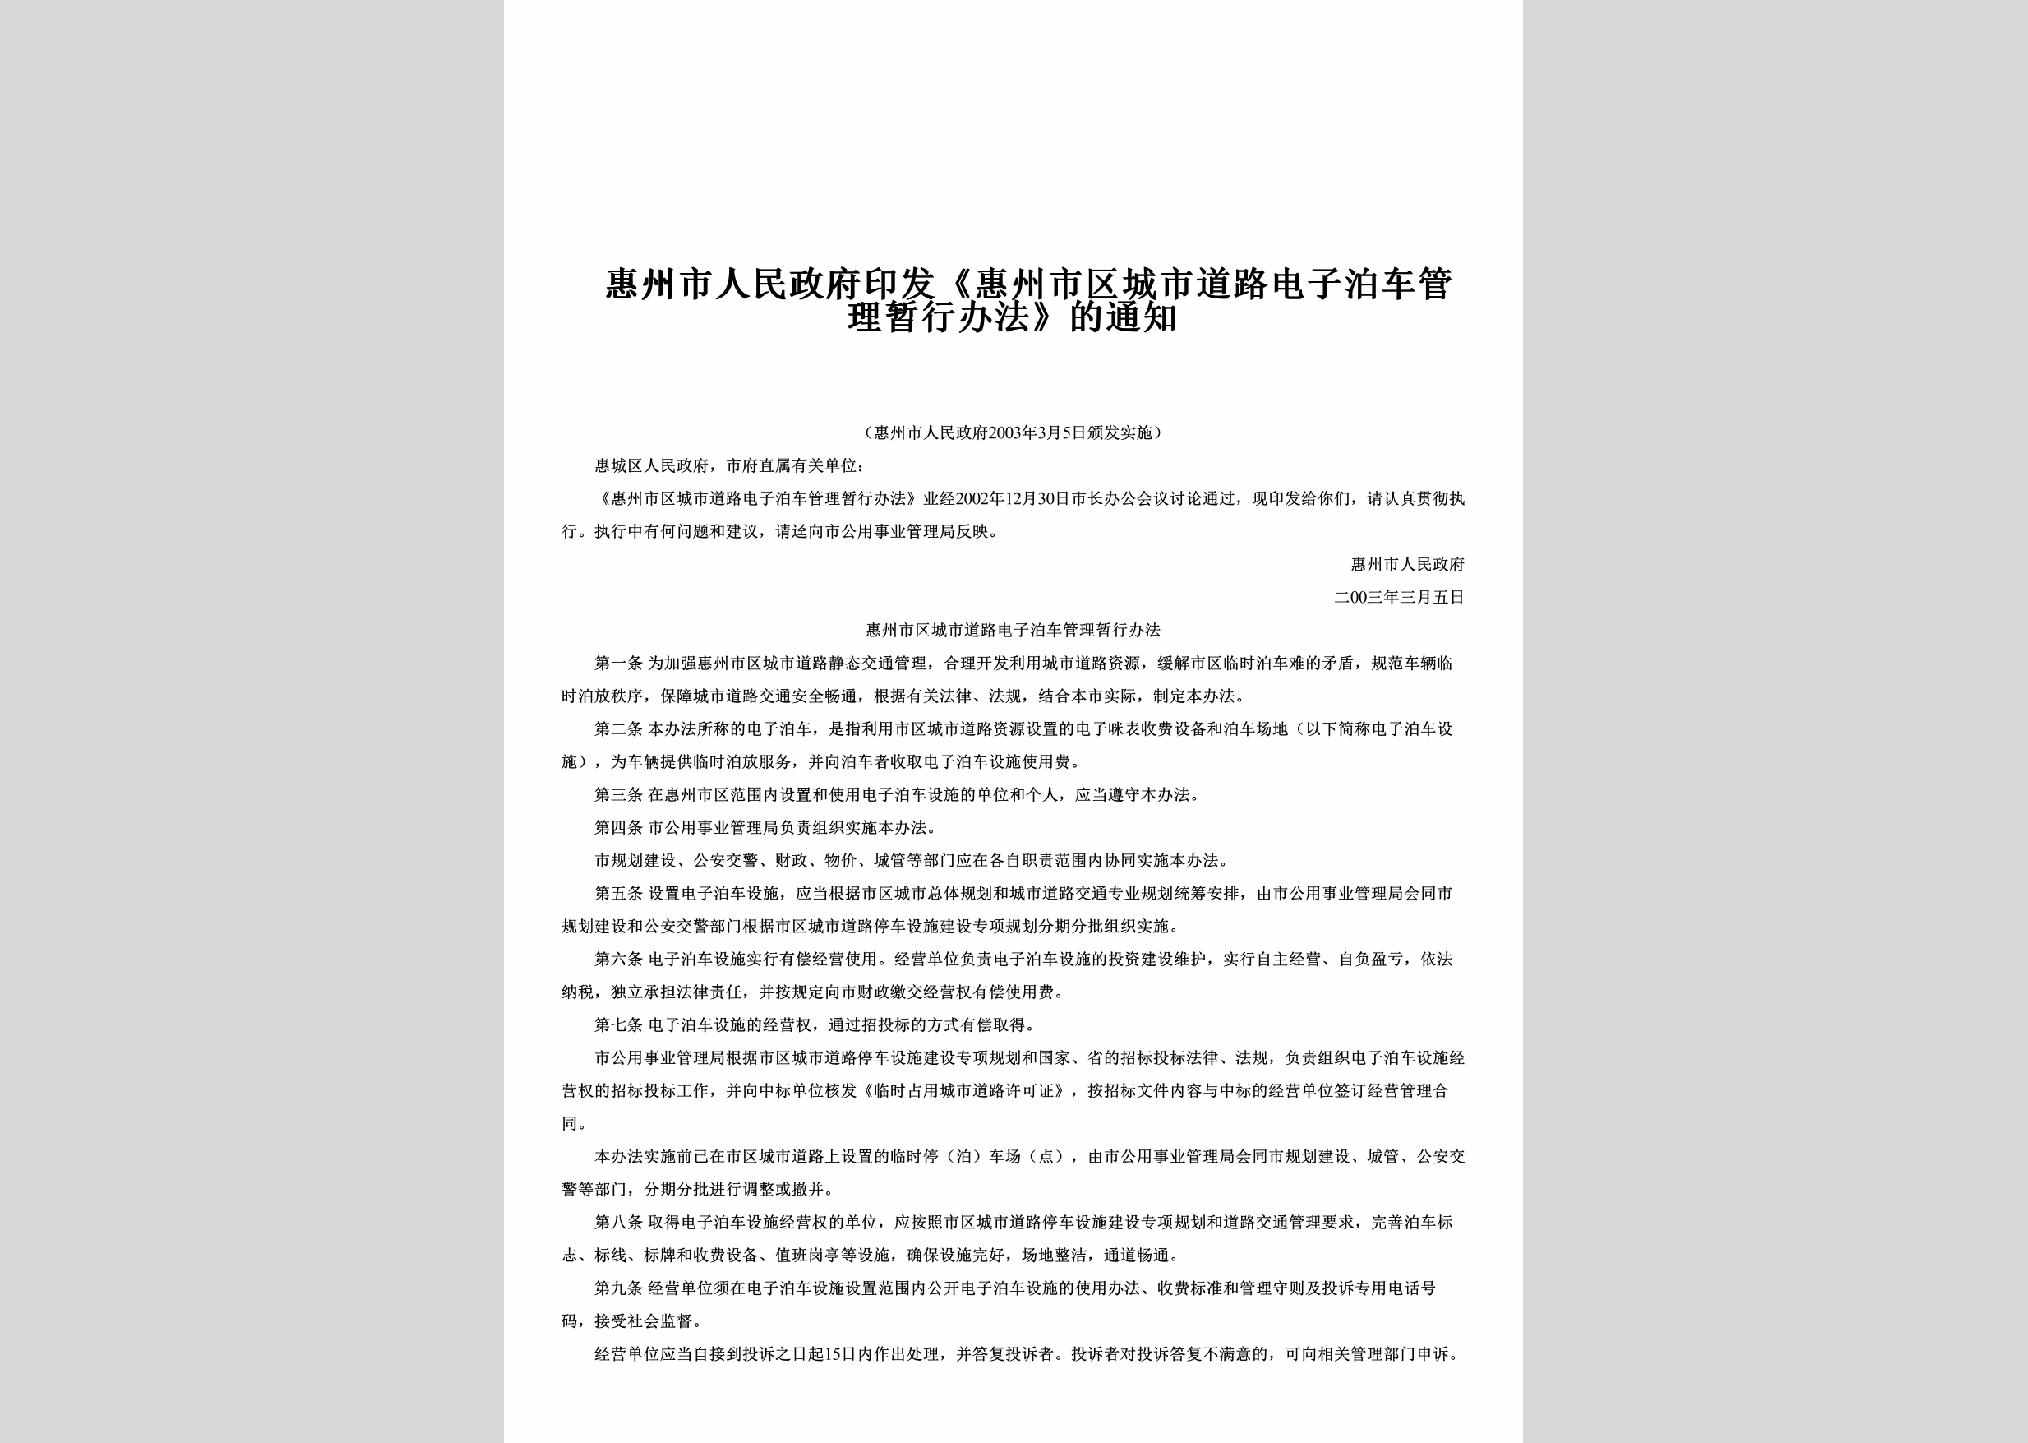 GD-DLBCGLTZ-2003：印发《惠州市区城市道路电子泊车管理暂行办法》的通知